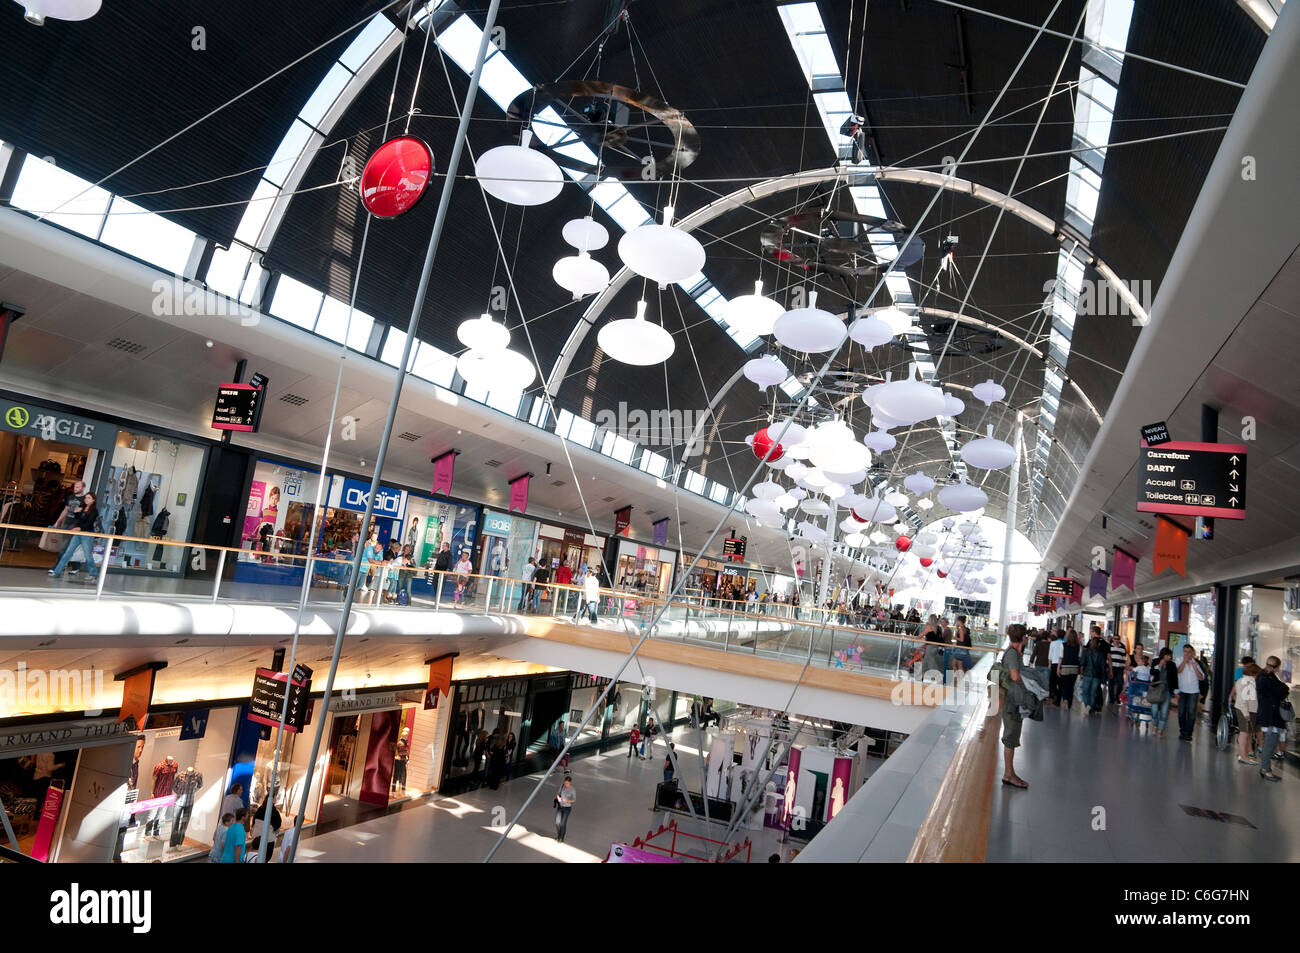 Cite Europe Shopping Centre Calais Banque d'image et photos - Alamy